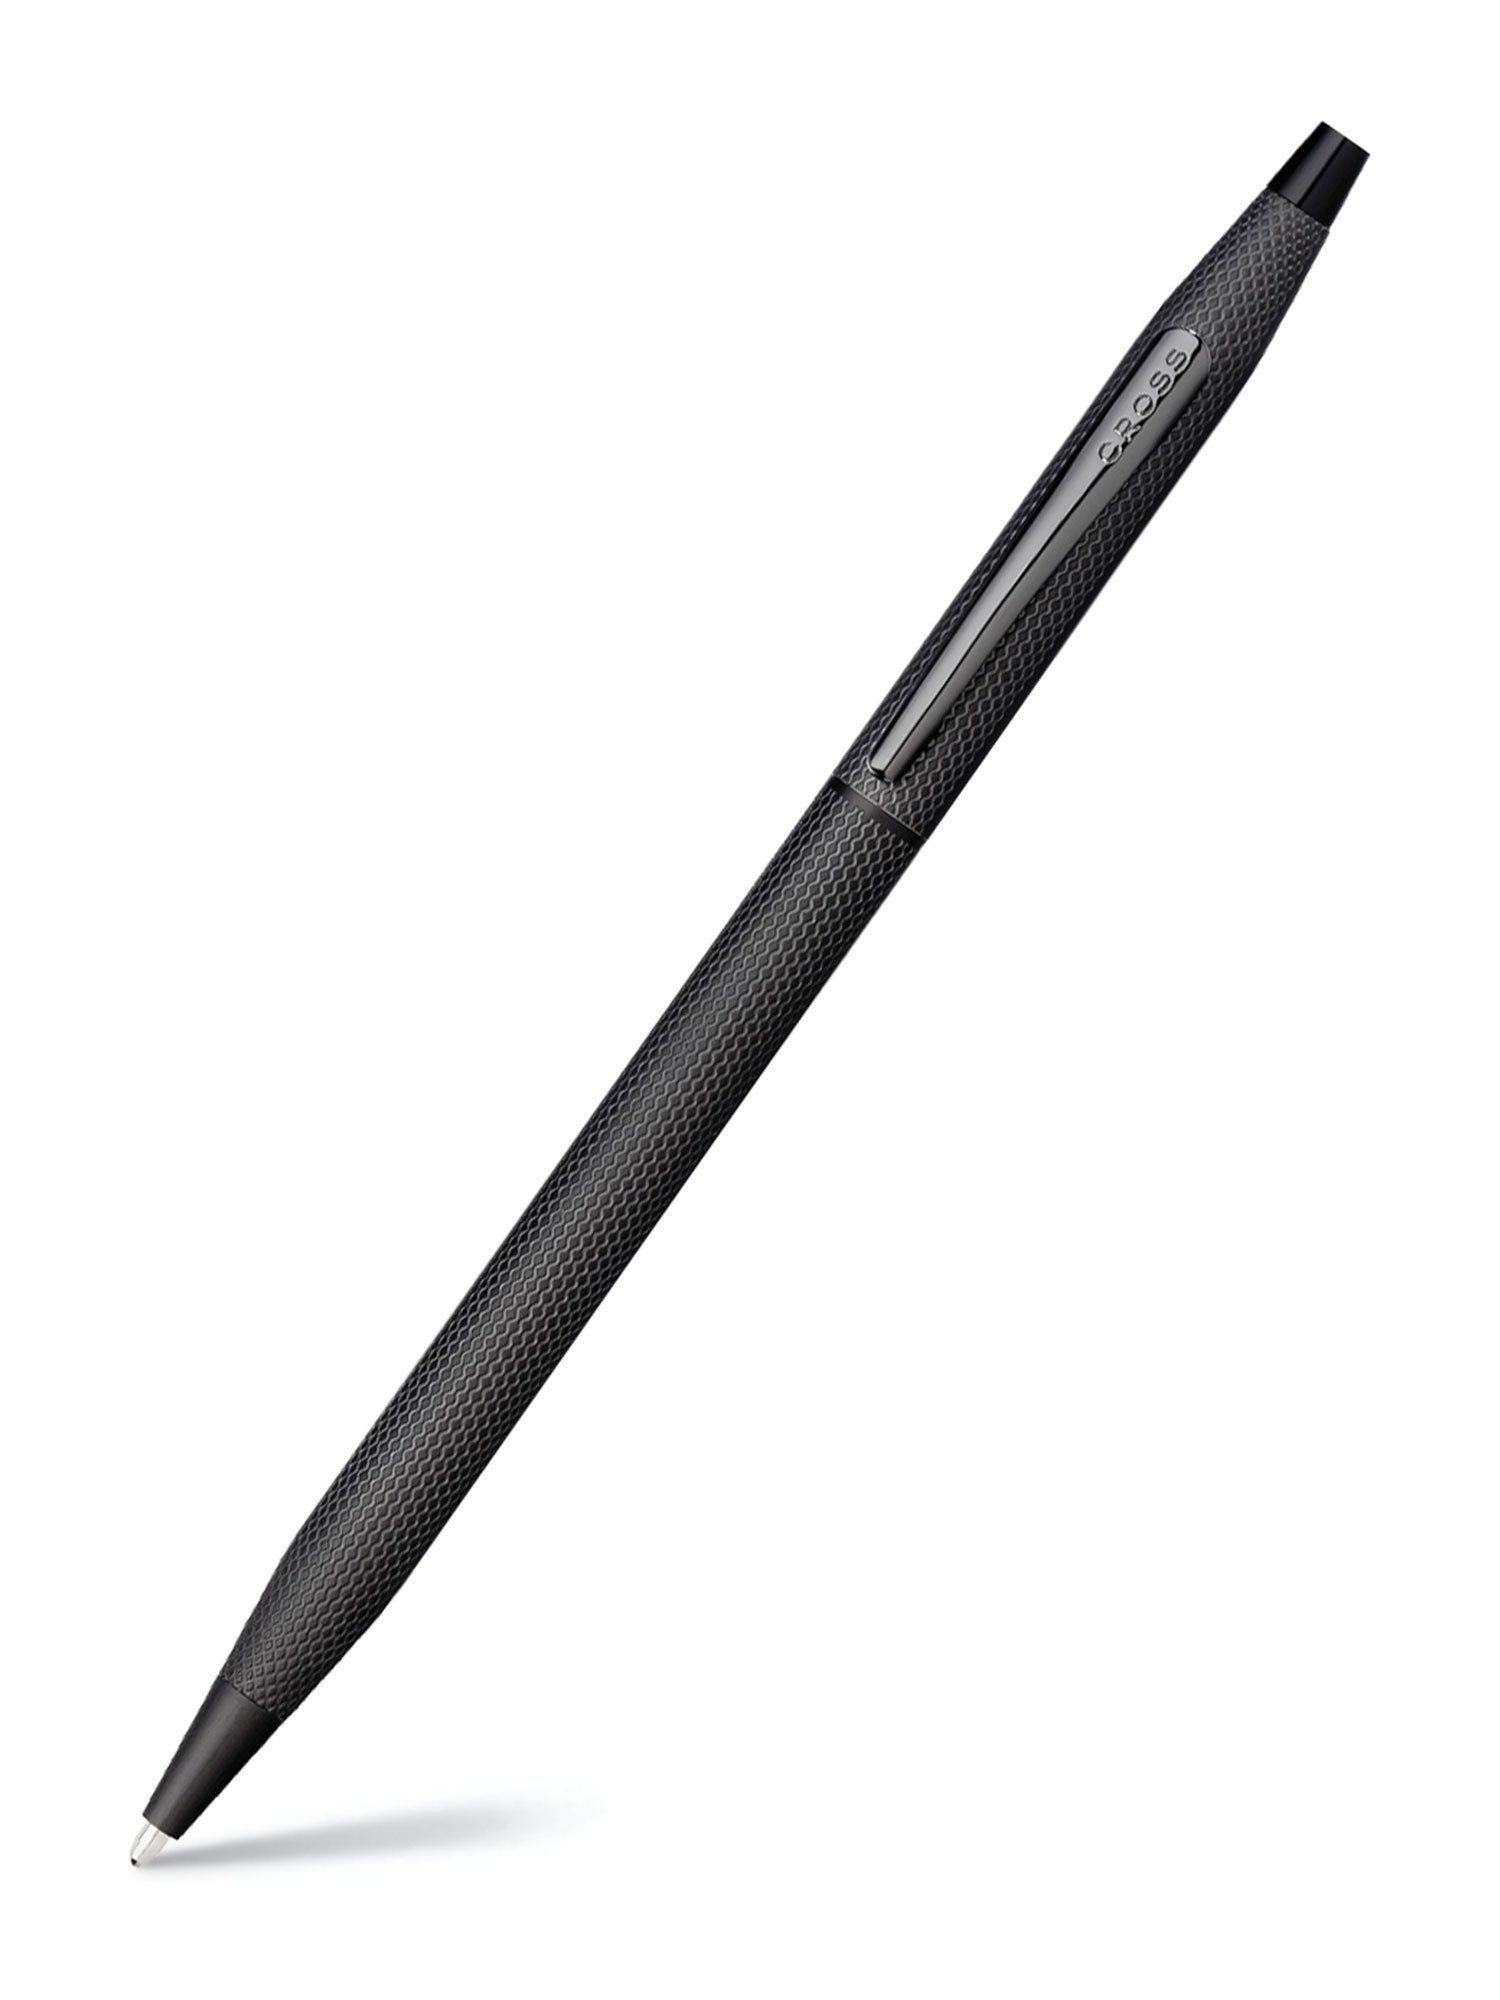 at0082-122 classic century brushed black pvd engraving ballpoint pen